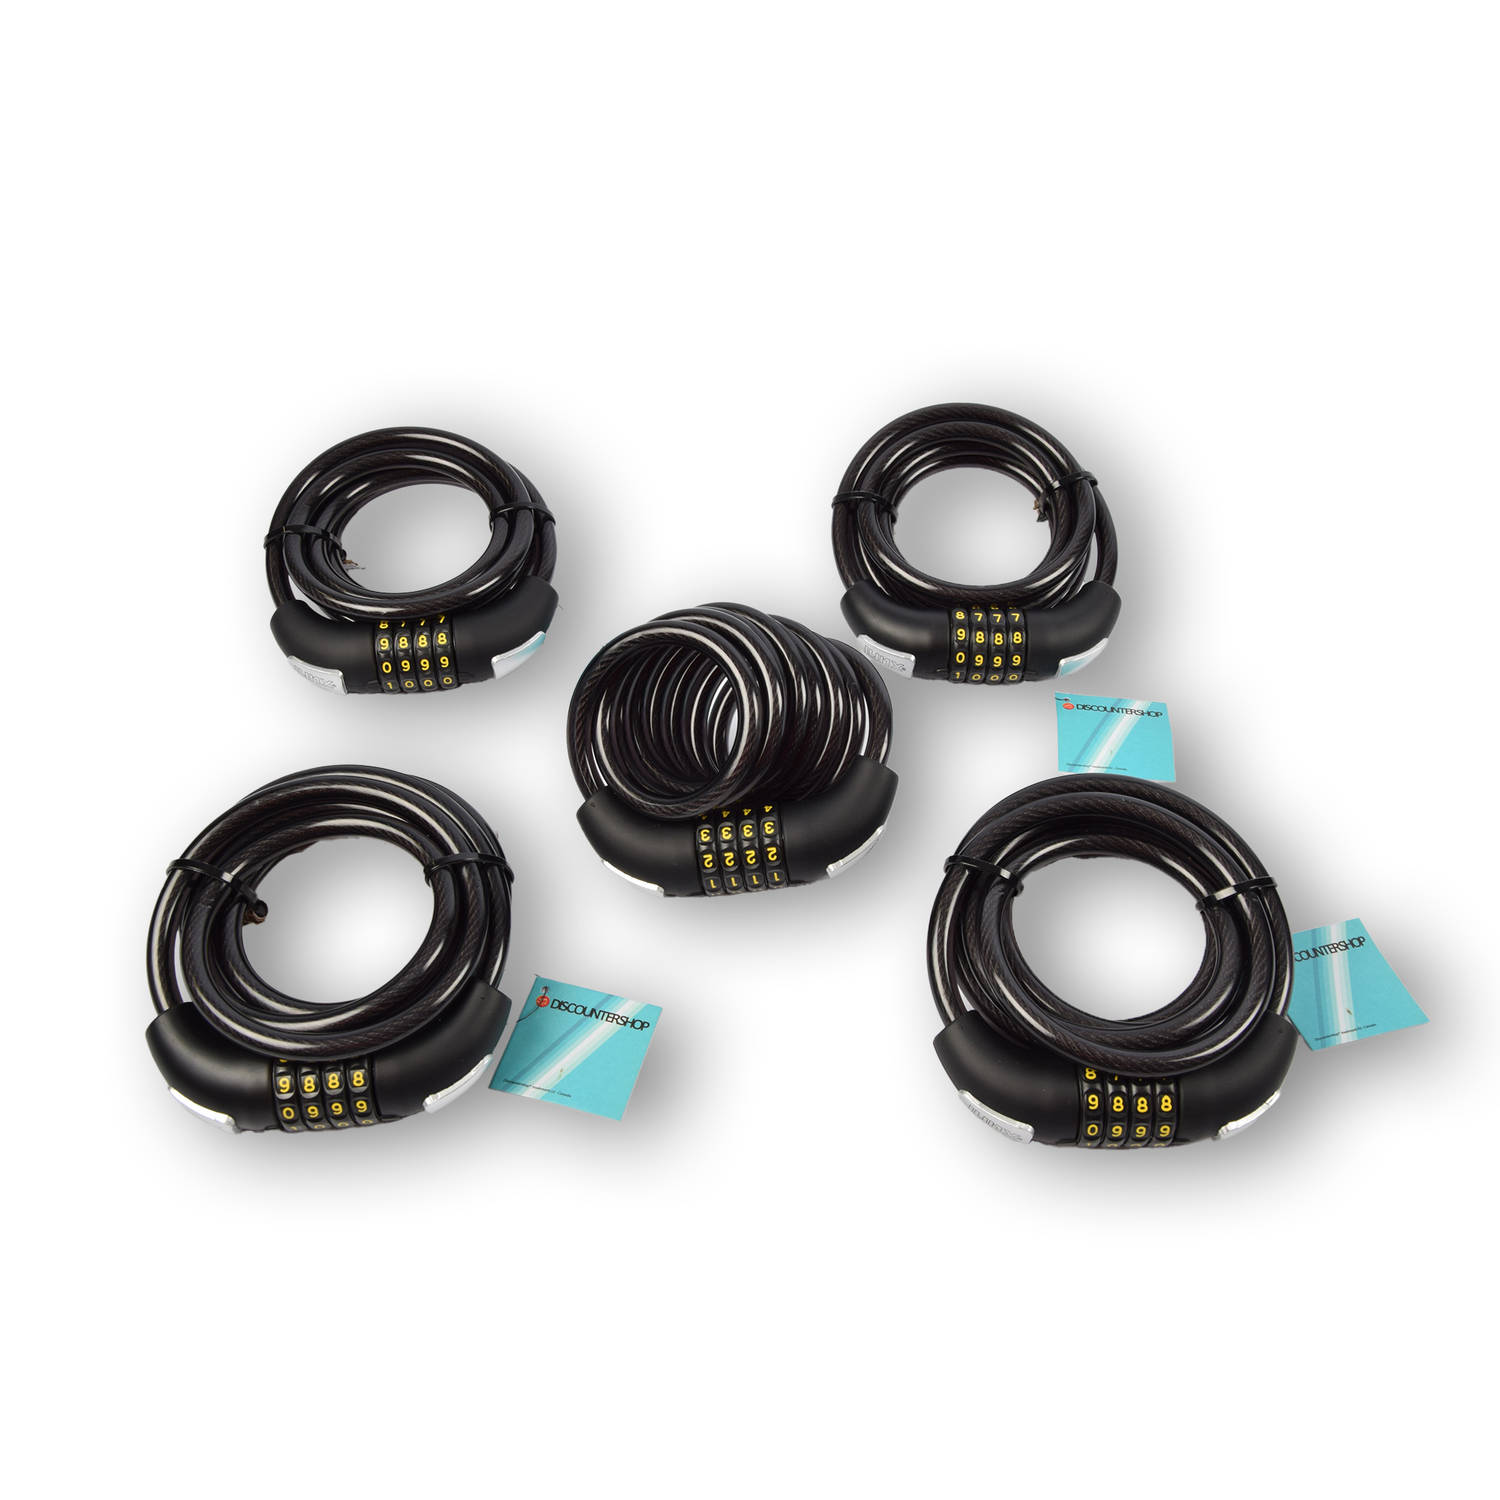 5x Topkwaliteit Zwarte Fietssloten Set met Cijfer- en Kabelslot Anti-Diefstal, Lichtgewicht (425g), 